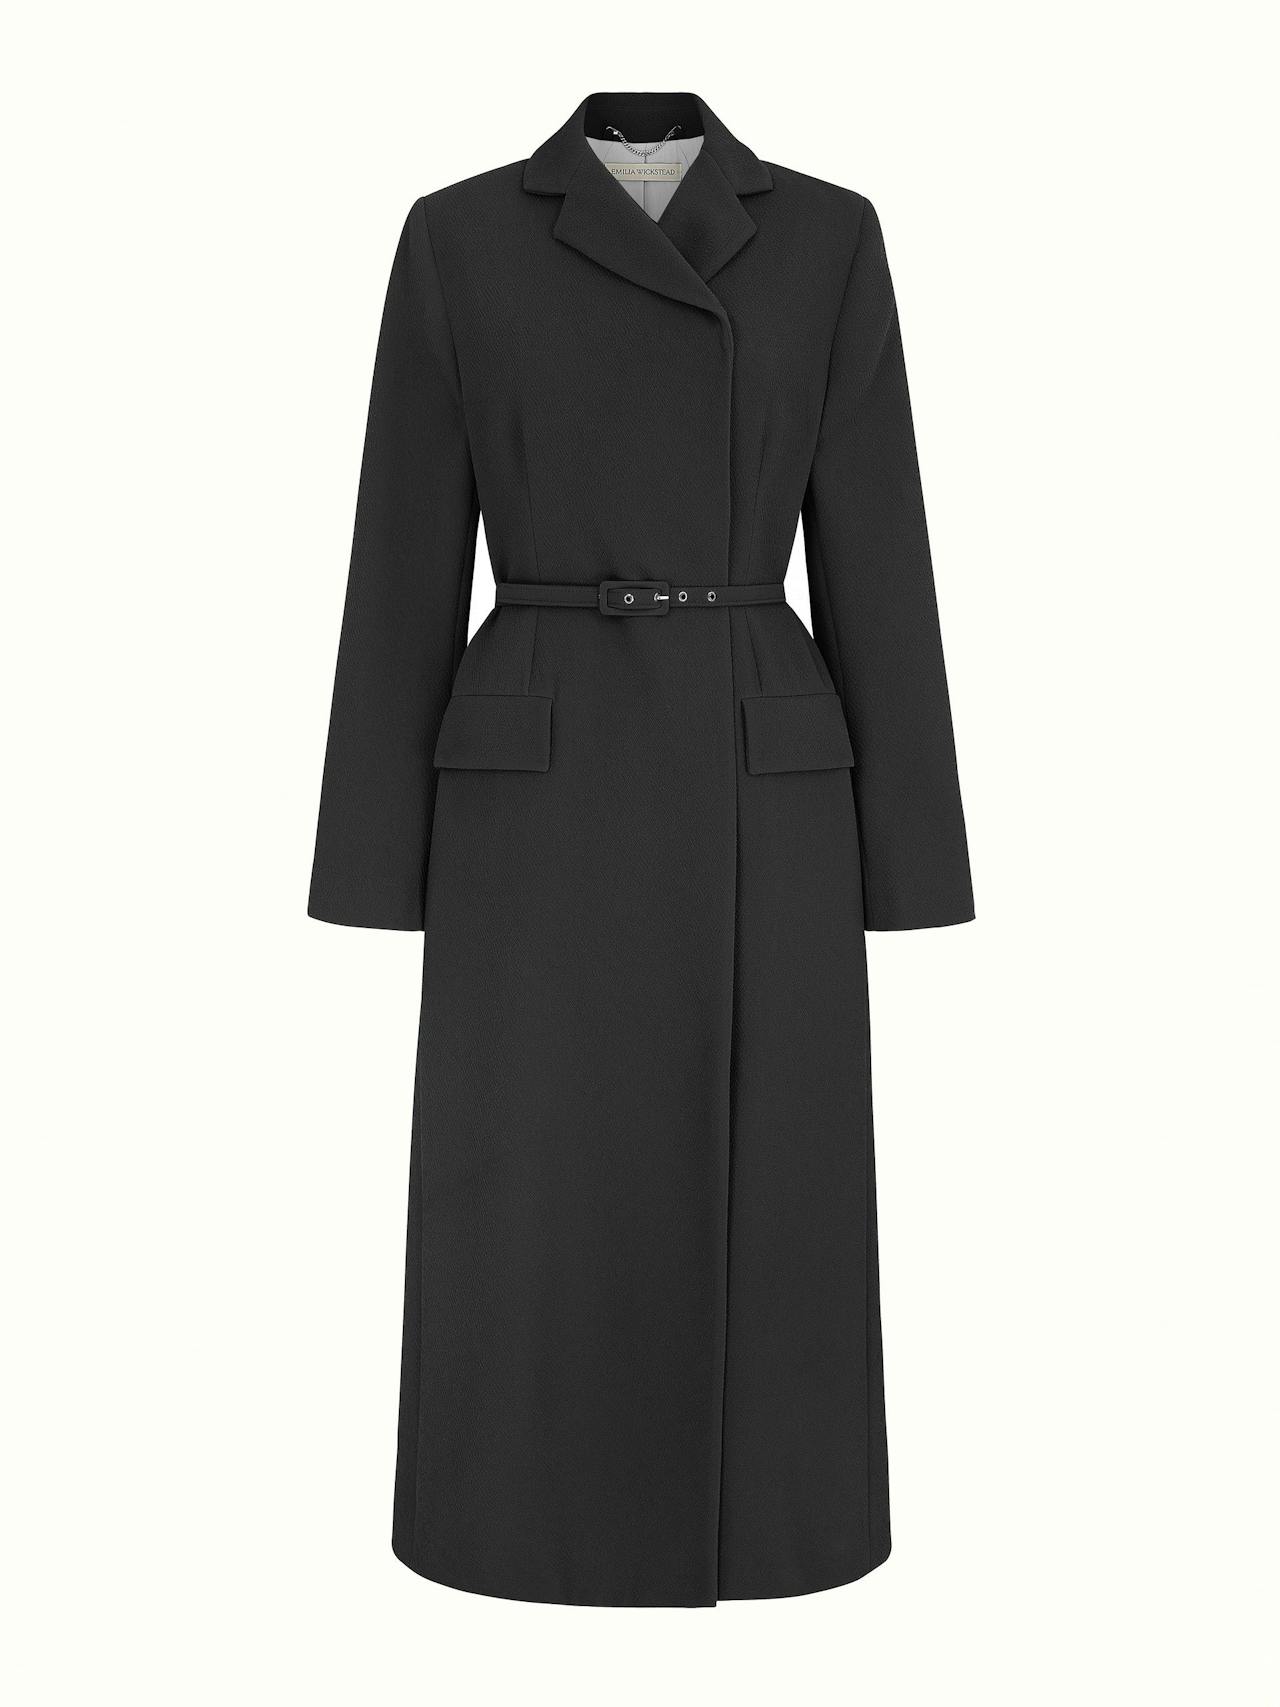 Kalonice wrap coat dress in black double crepe